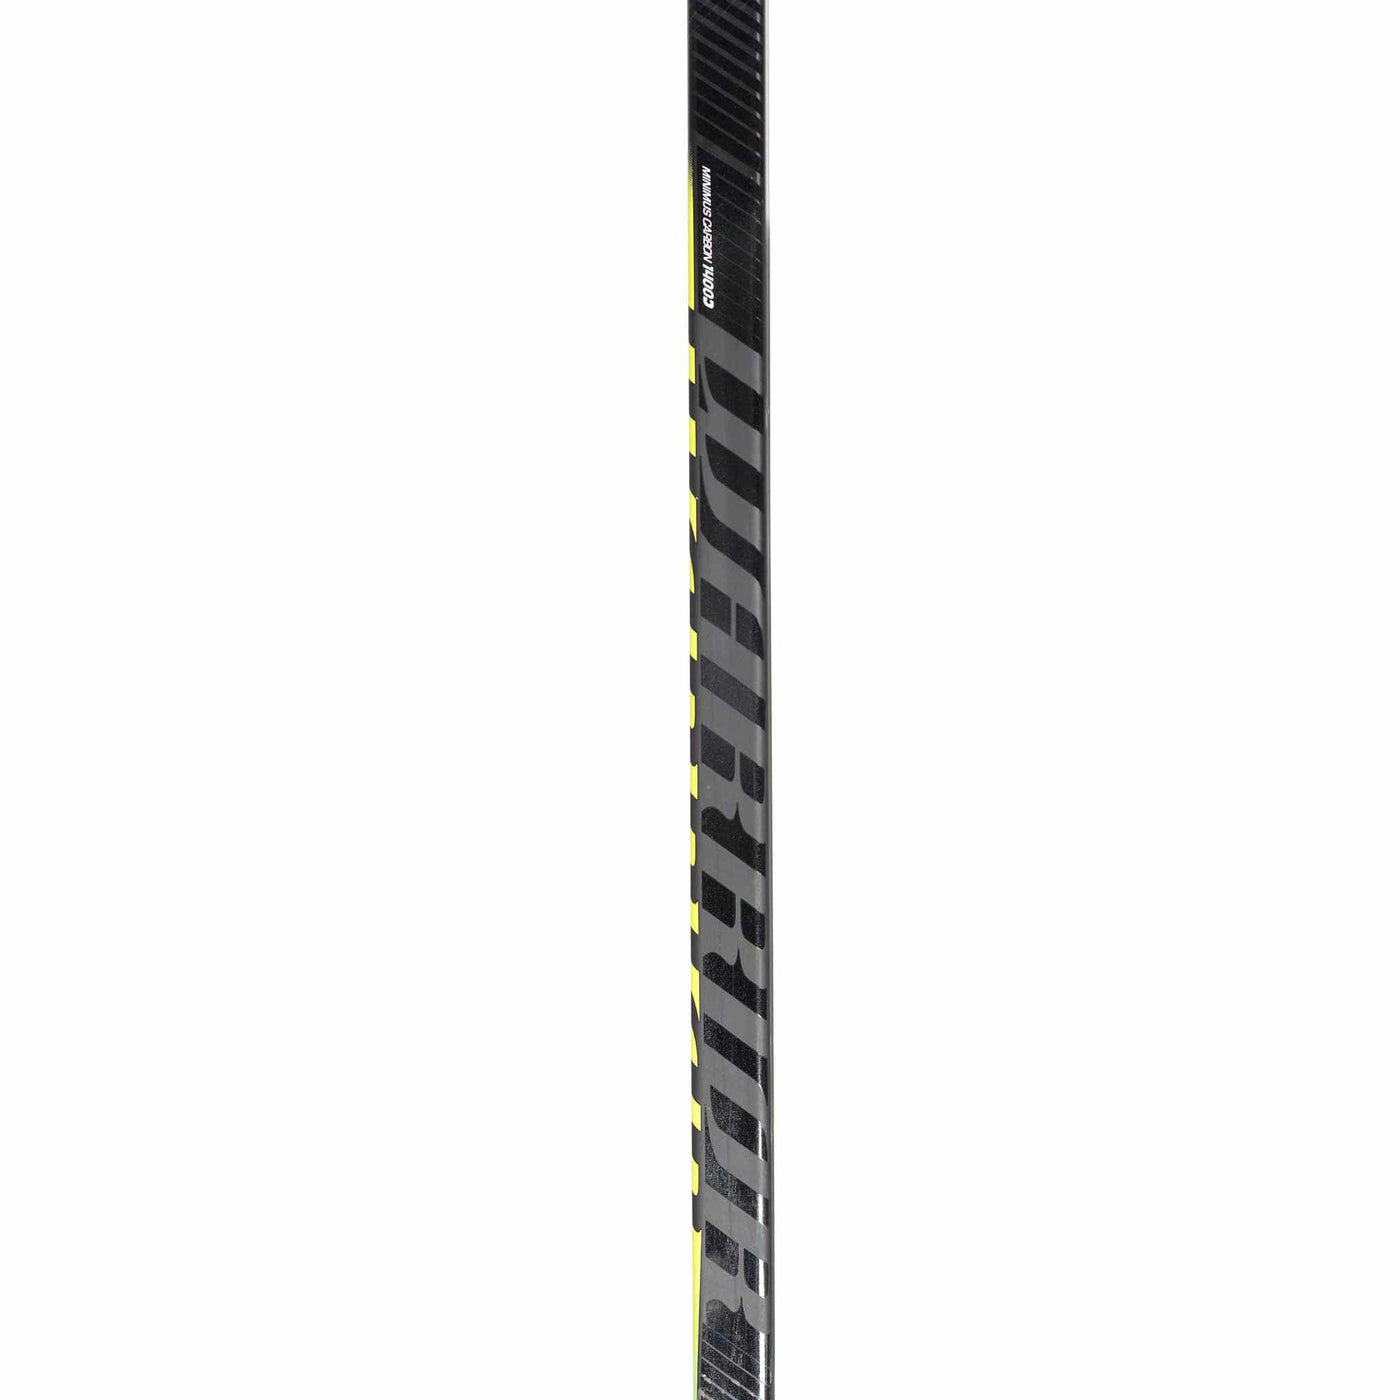 Warrior Alpha DX Senior Hockey Stick - No Grip